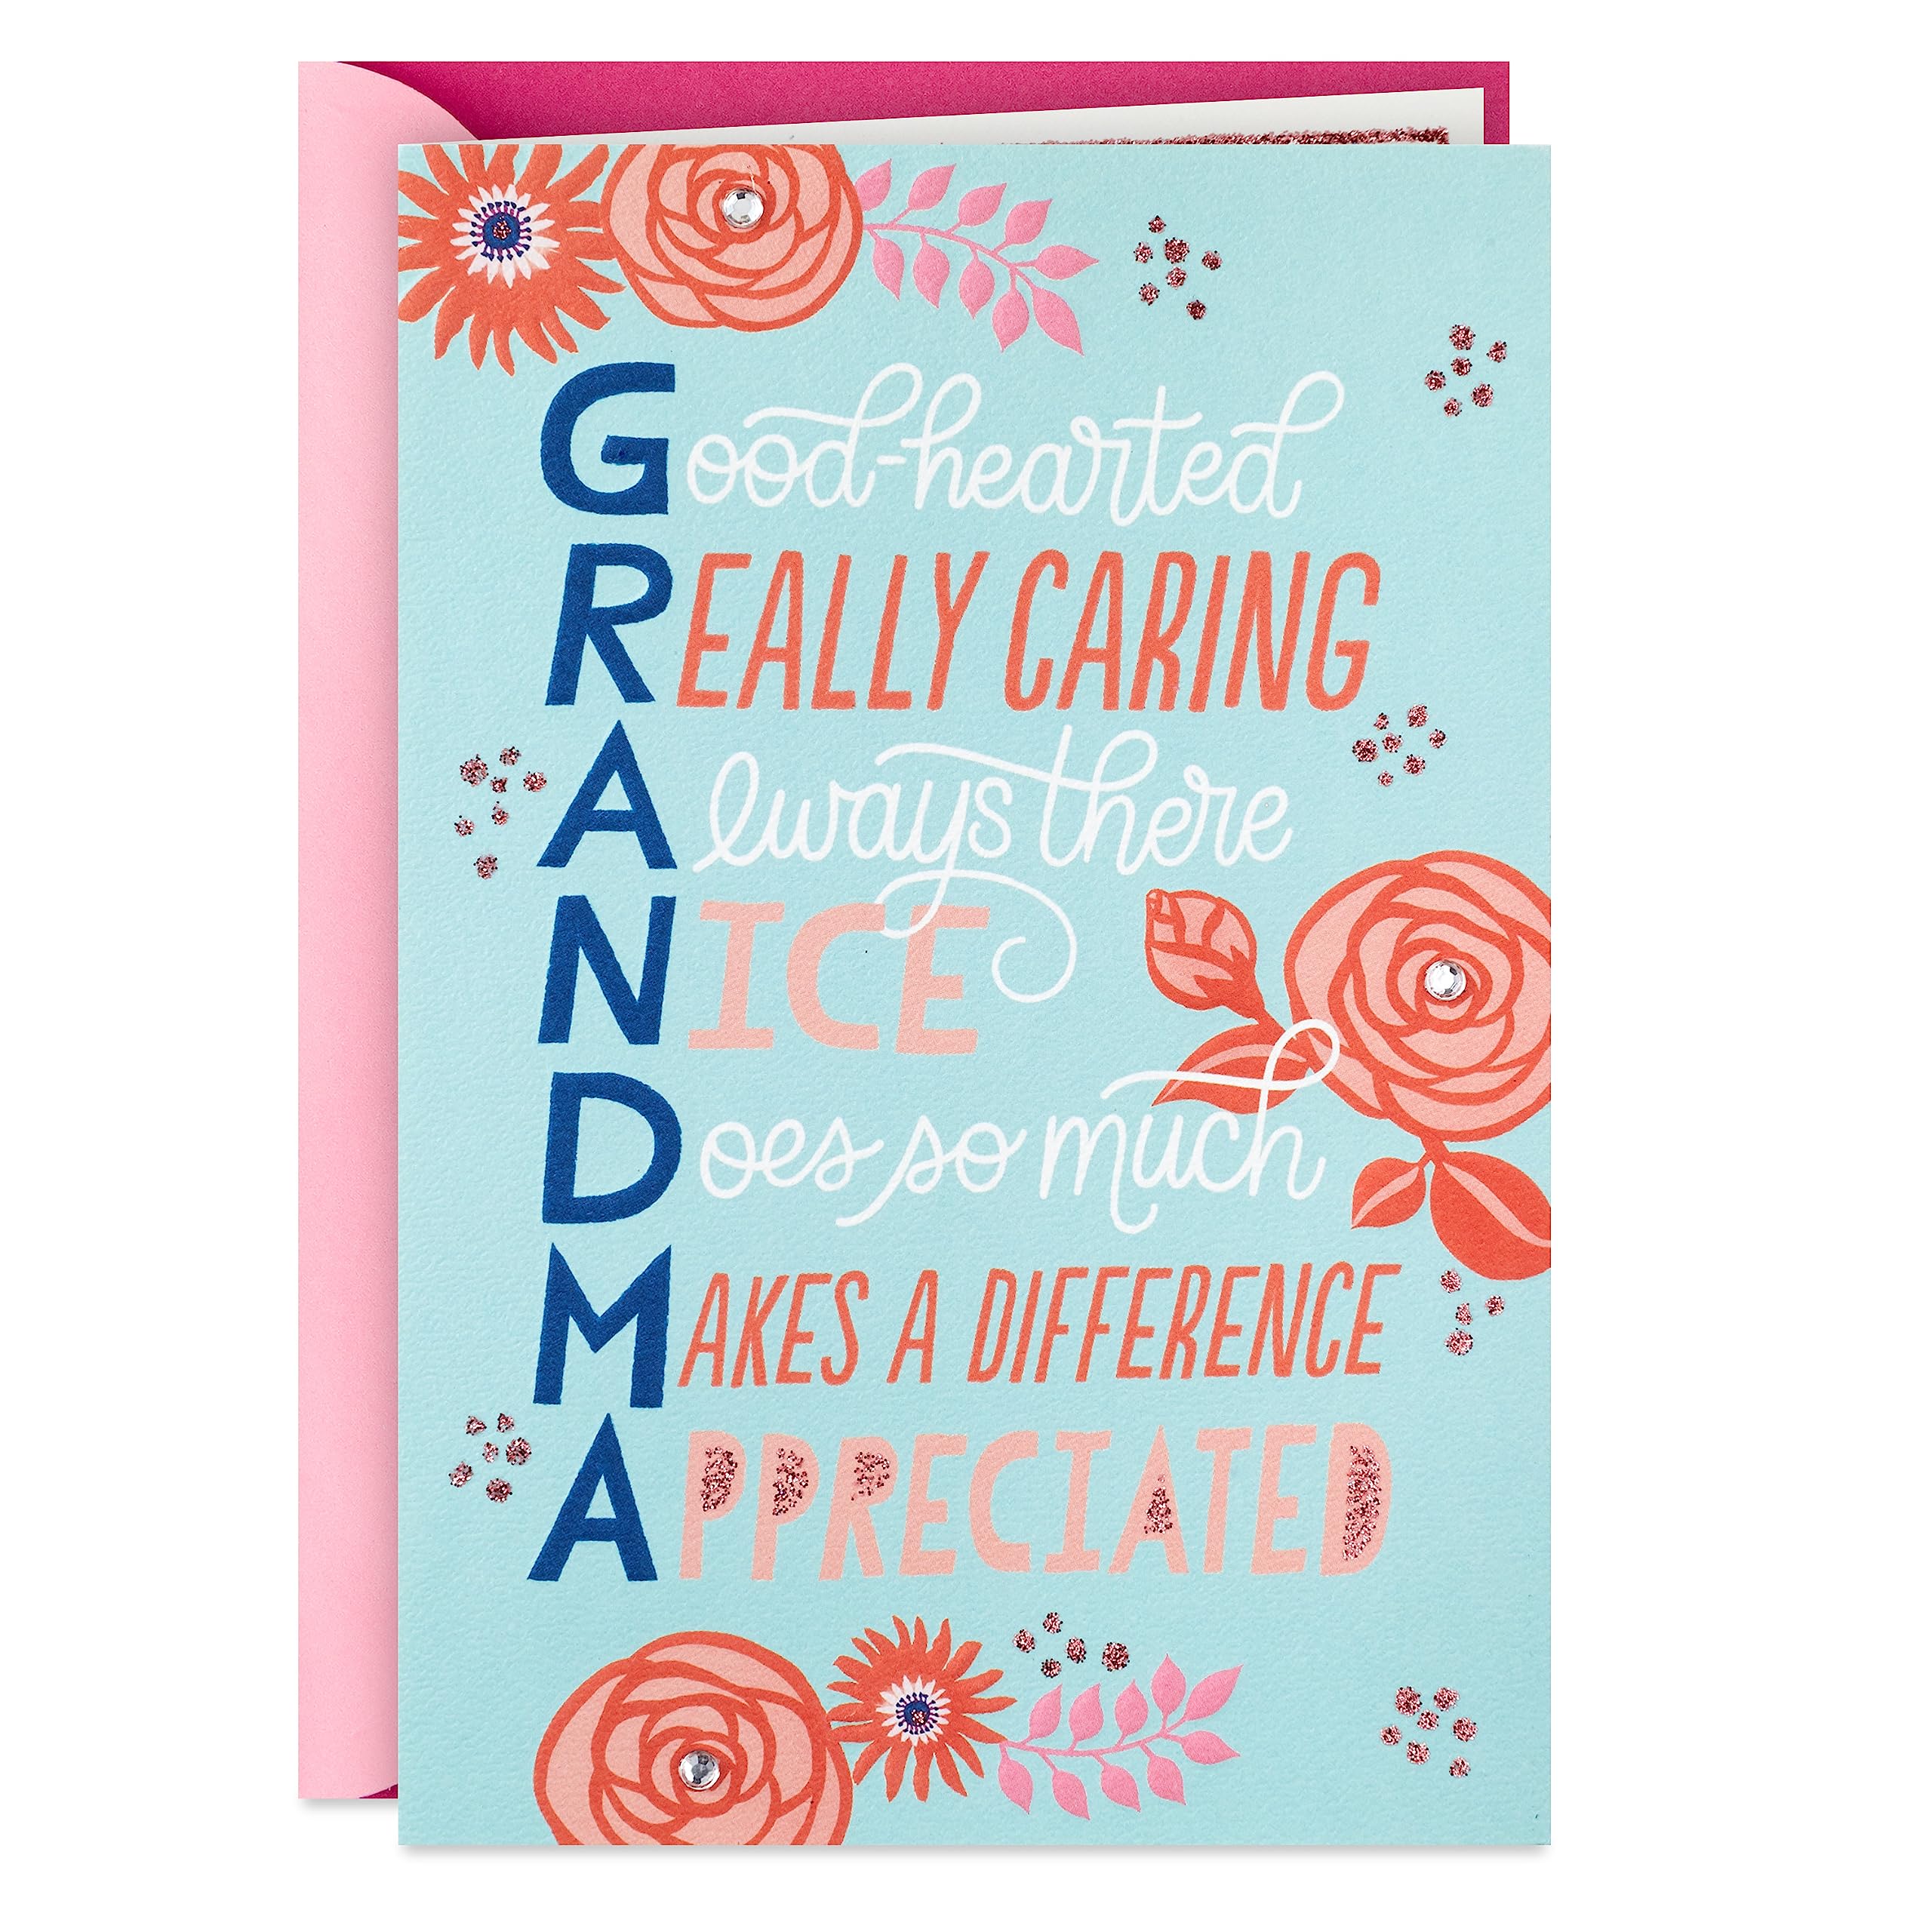 Hallmark Card for Grandma (Good-hearted) for Grandparent's Day, Birthdays, Valentine's Day